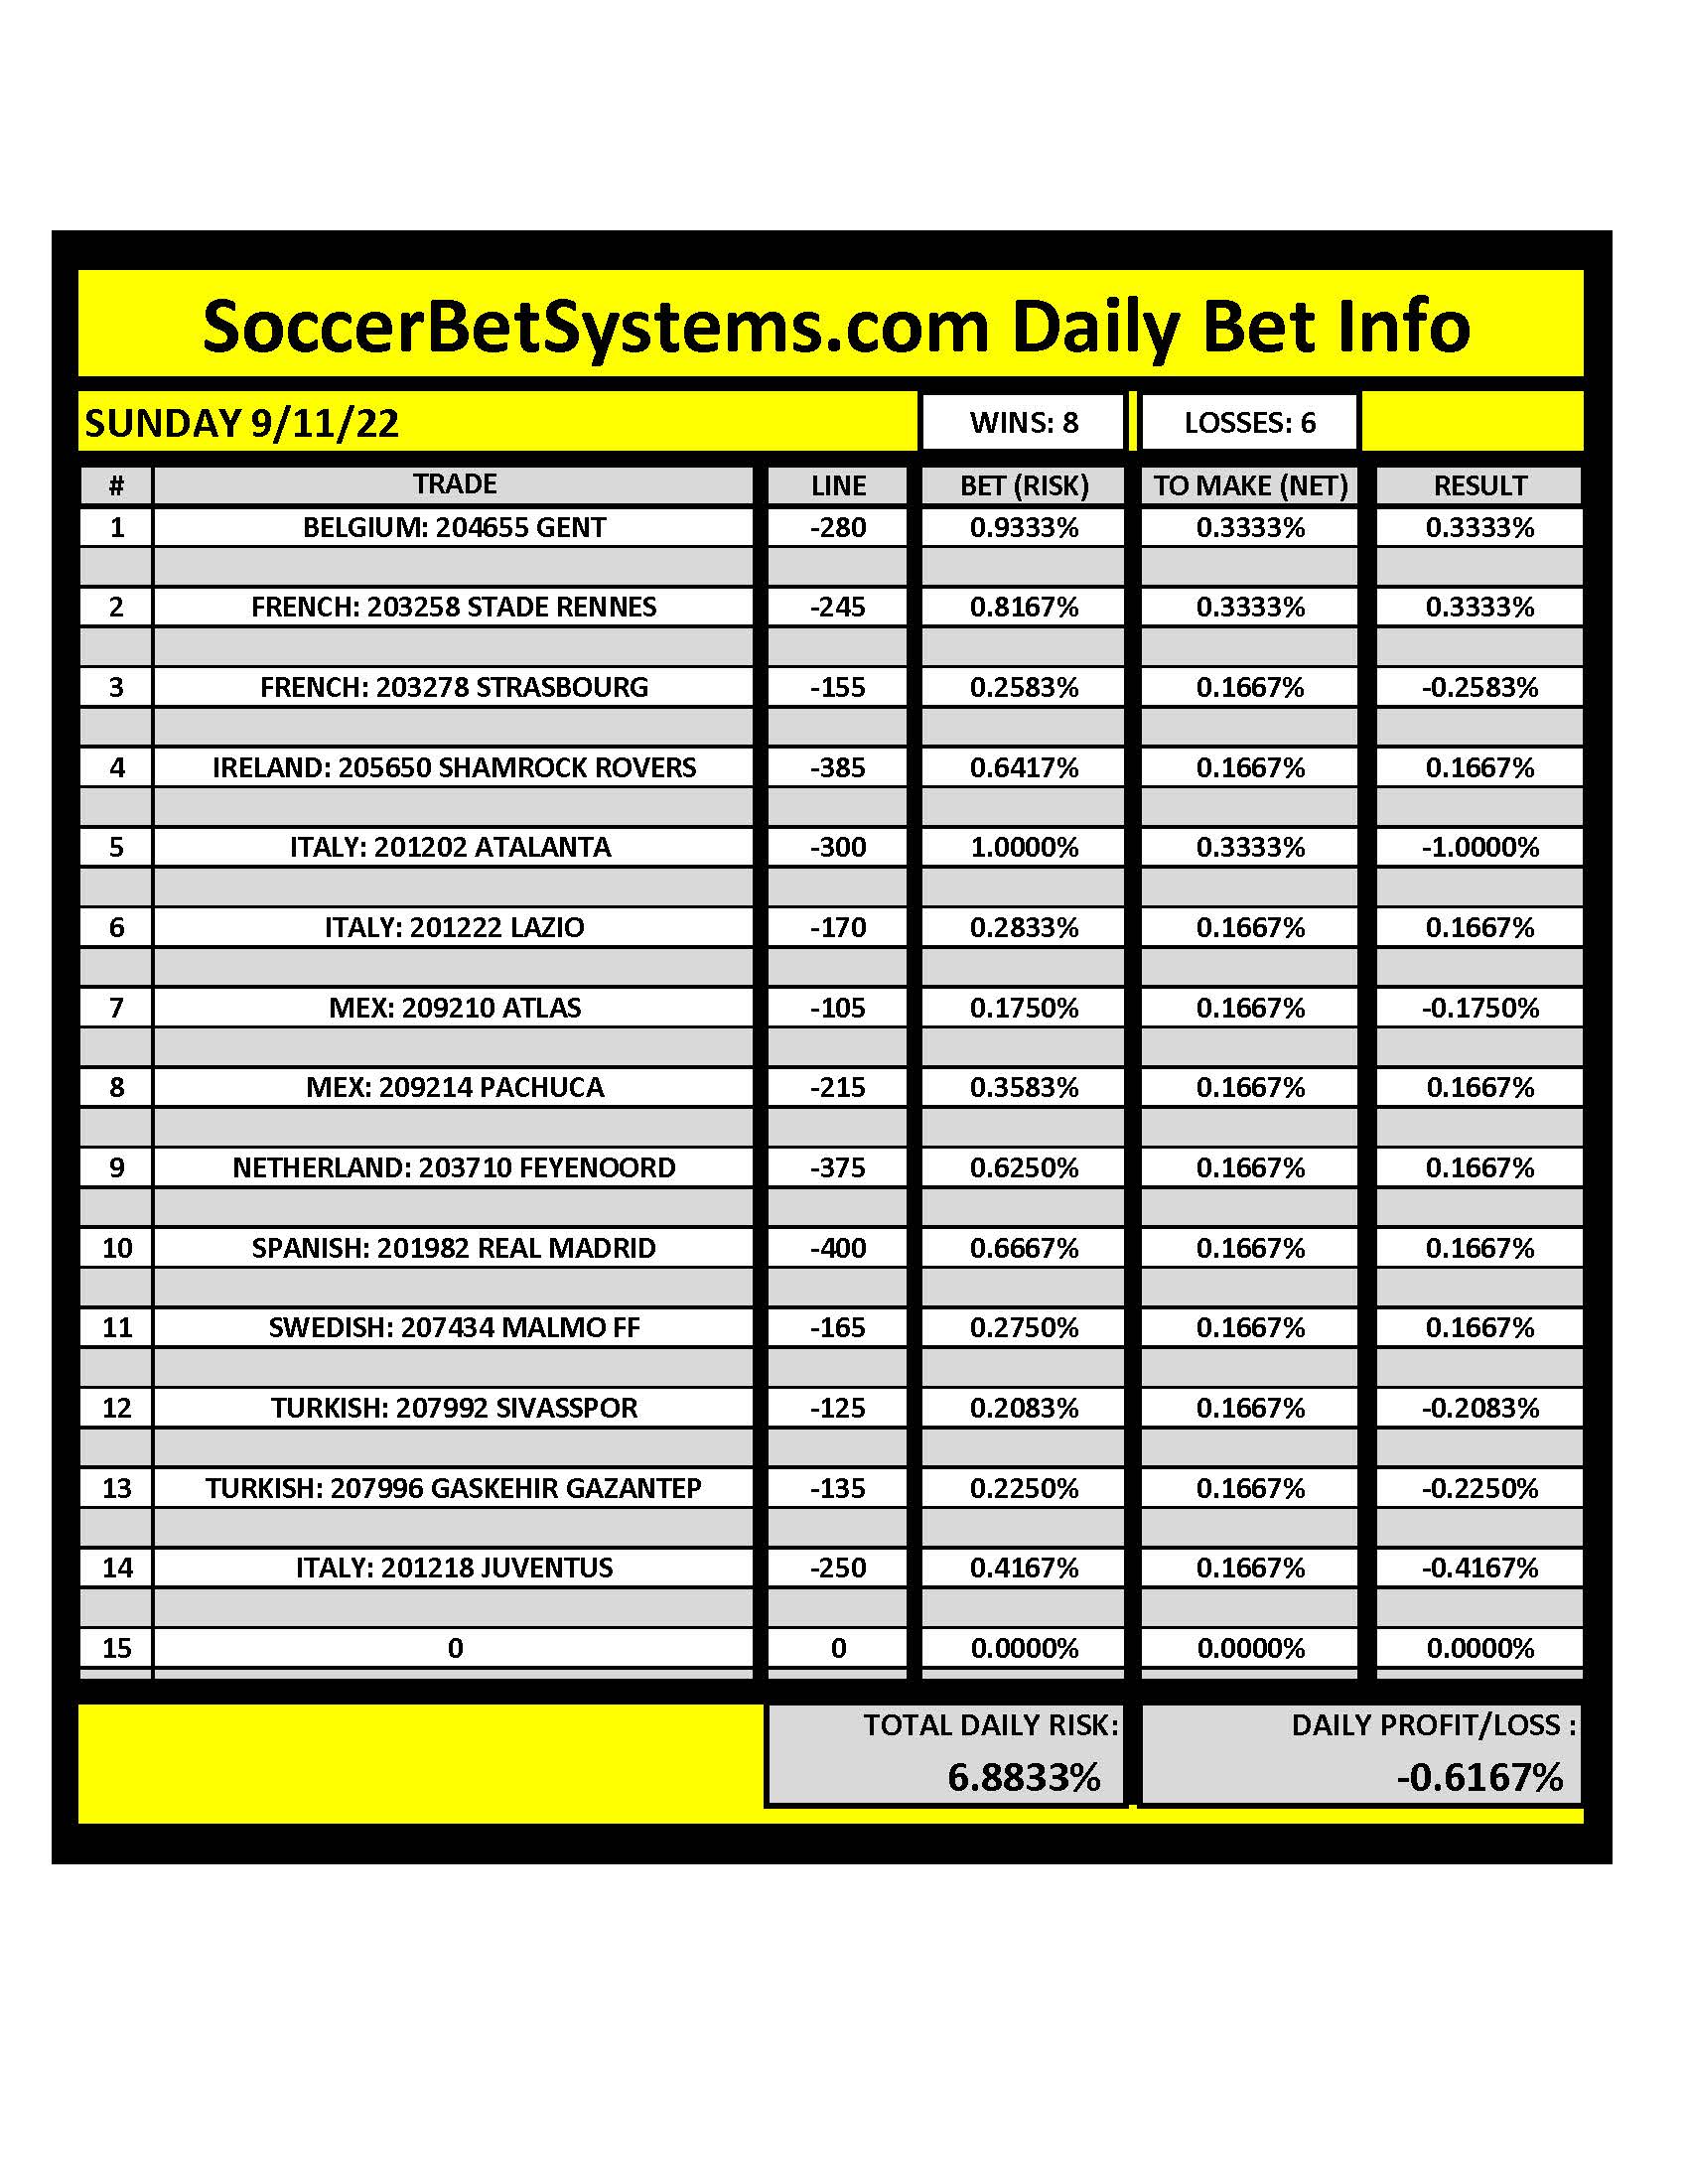 SoccerBetSystems.com 9/11/22 Daily Results